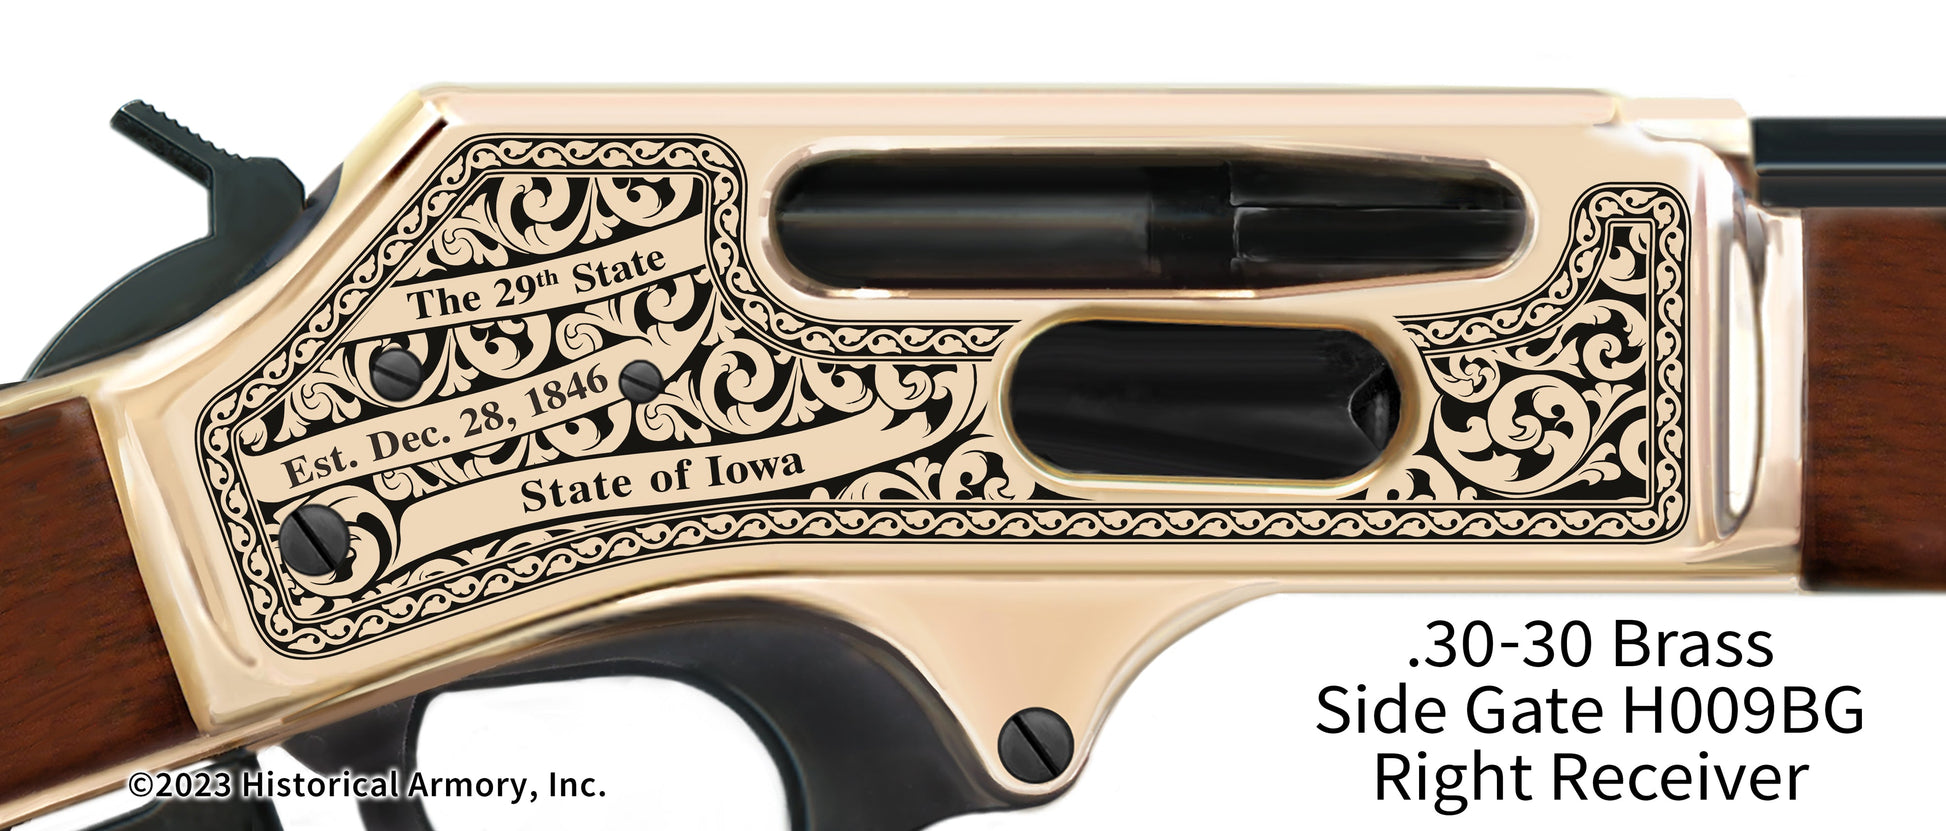 Wayne County Iowa Engraved Henry .30-30 Brass Side Gate Rifle